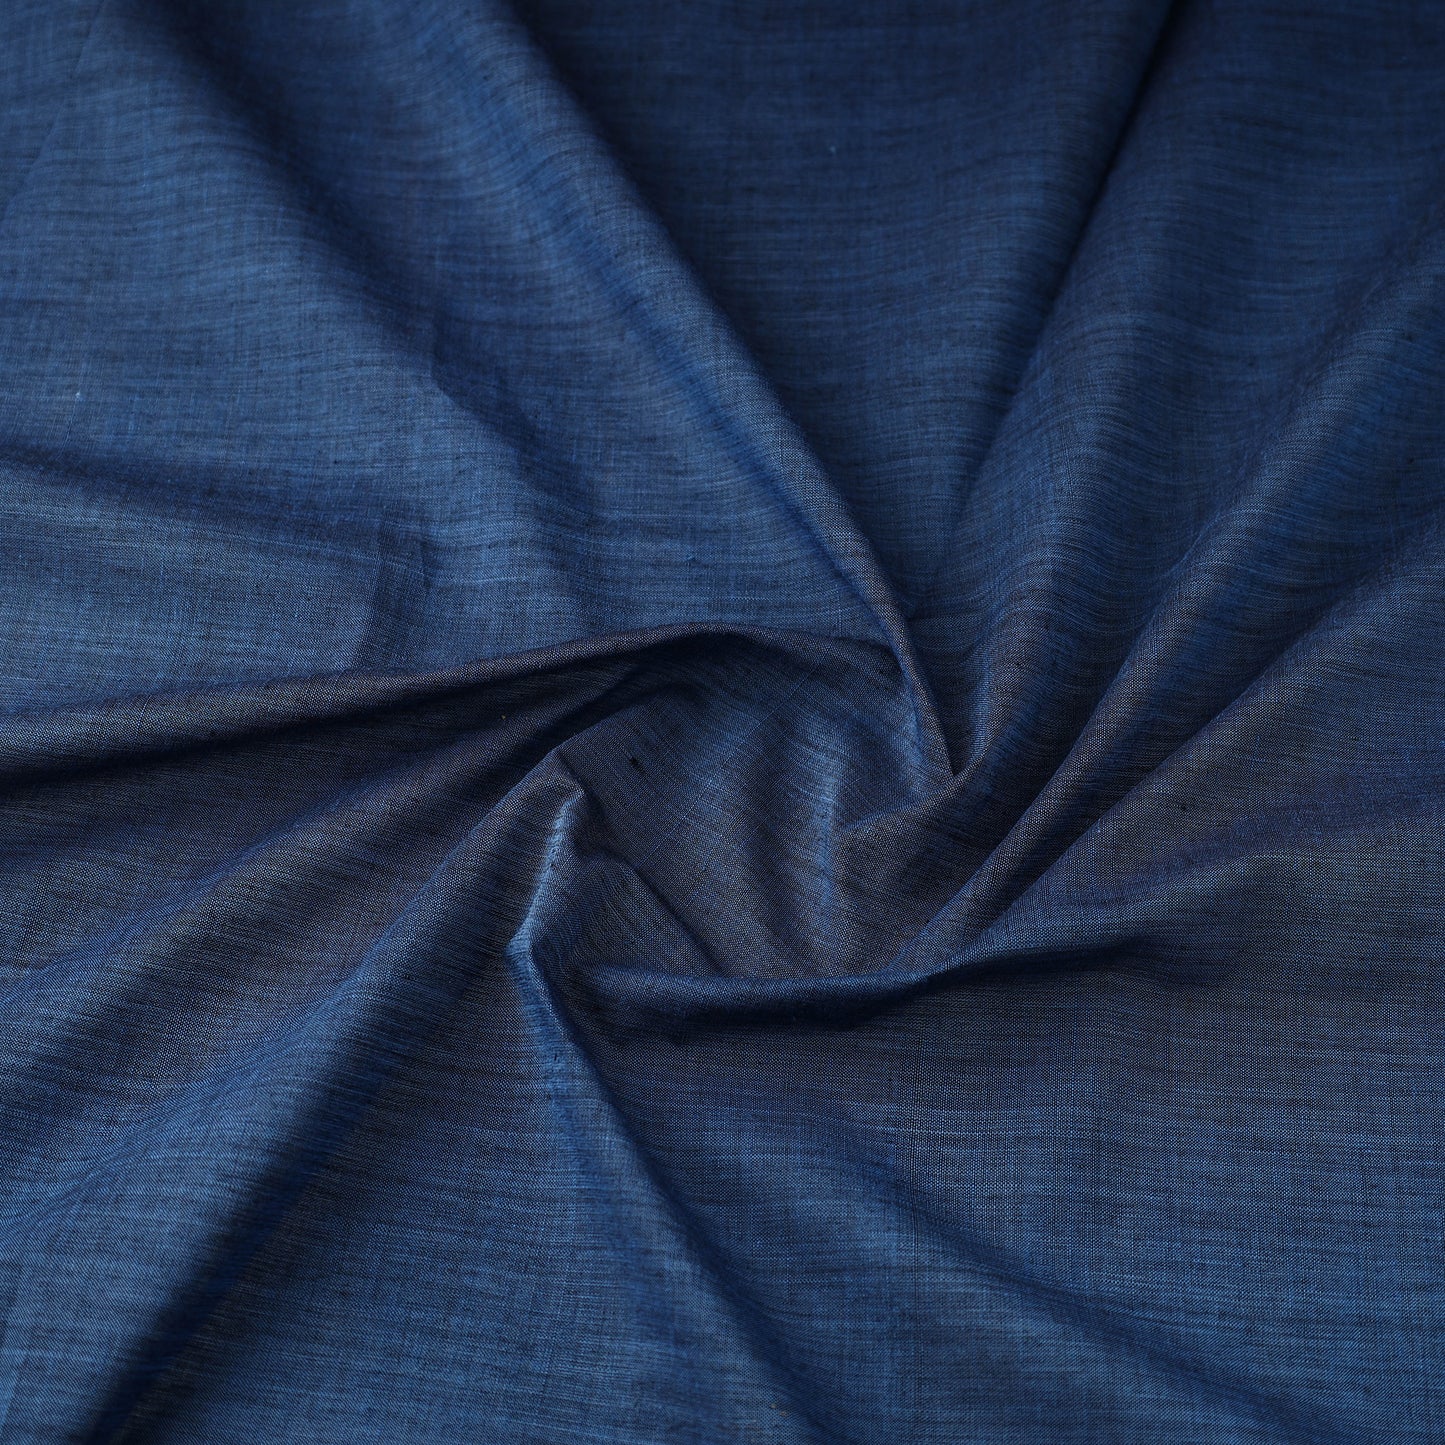 Blue - Mangalagiri Plain Handloom Cotton Fabric